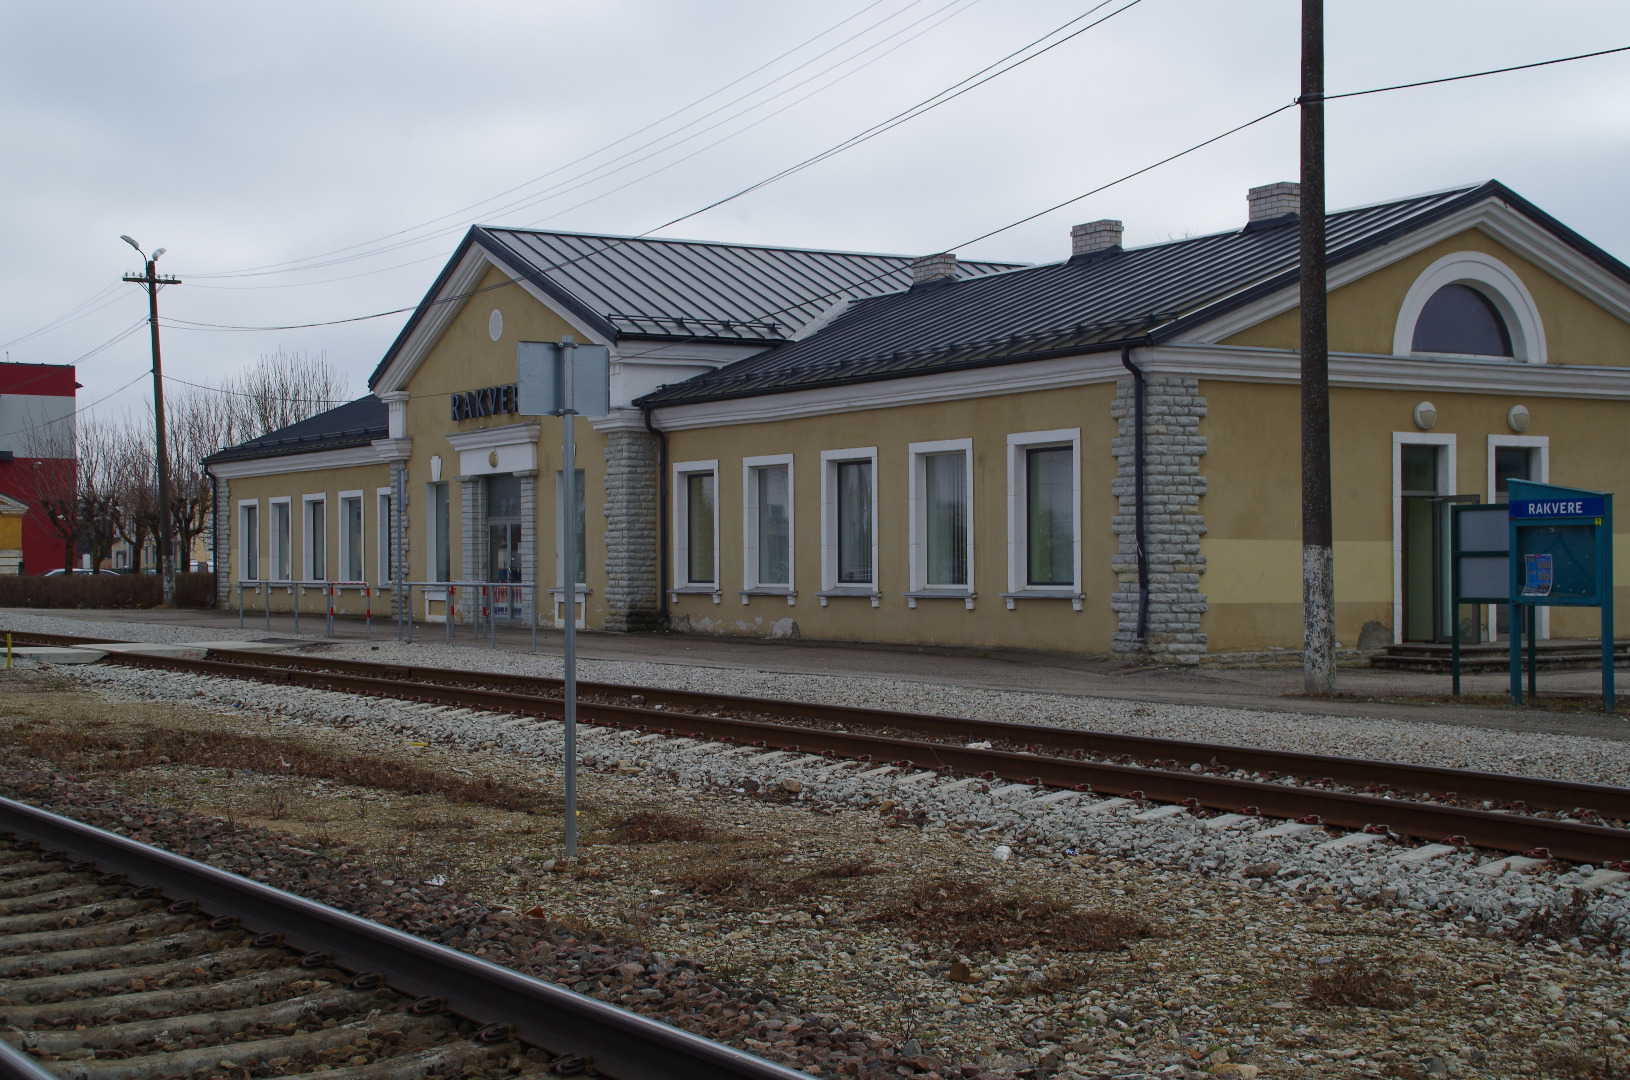 Rakvere station building rephoto